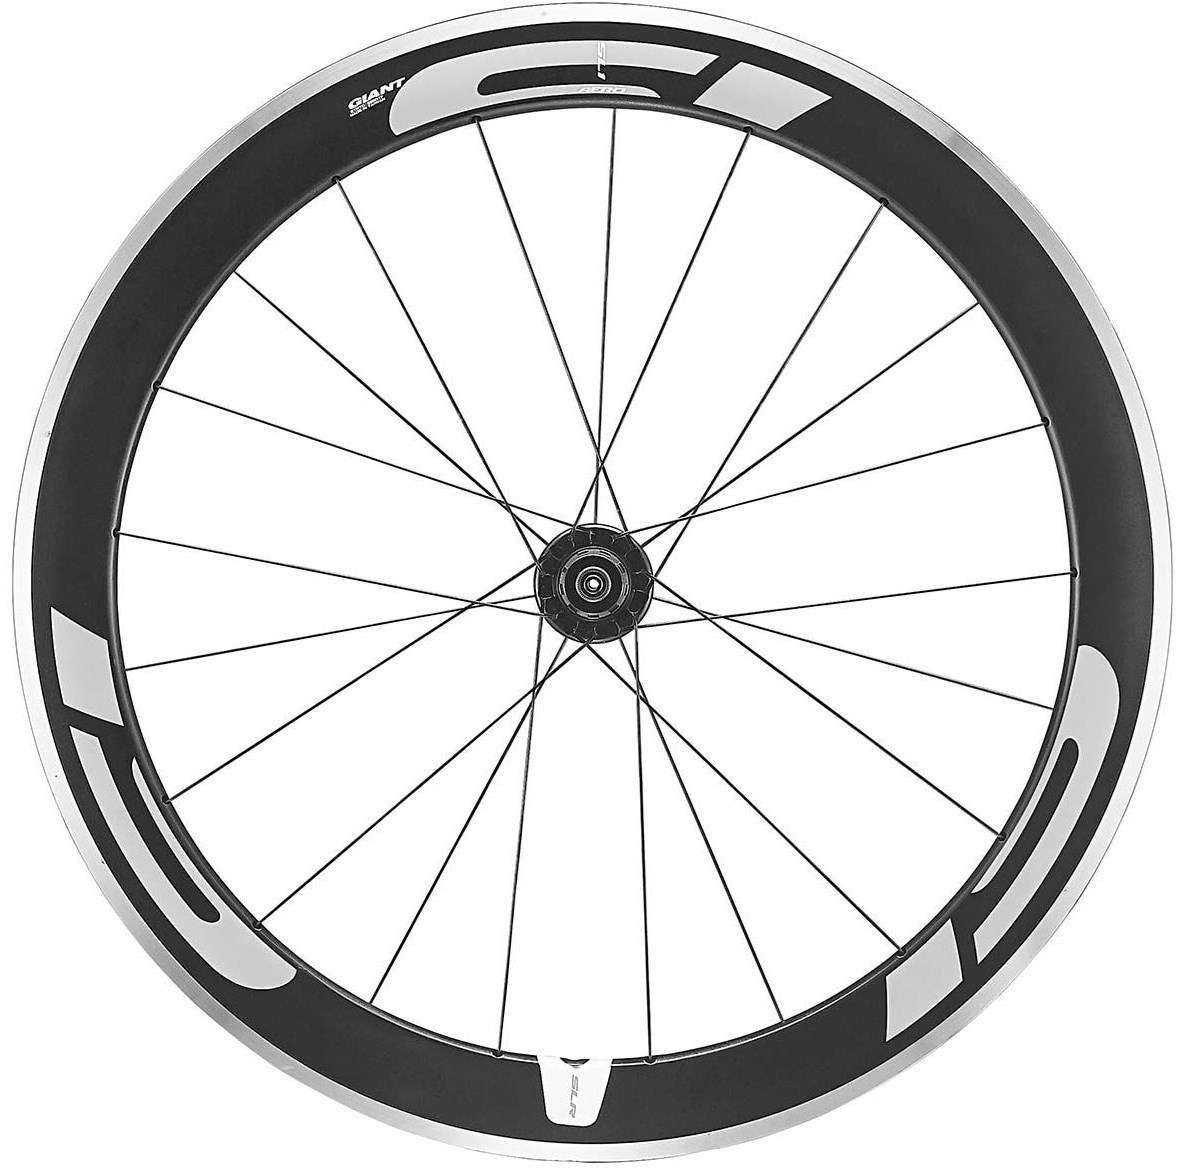 Giant SL 1 Aero Road Rear Wheel product image